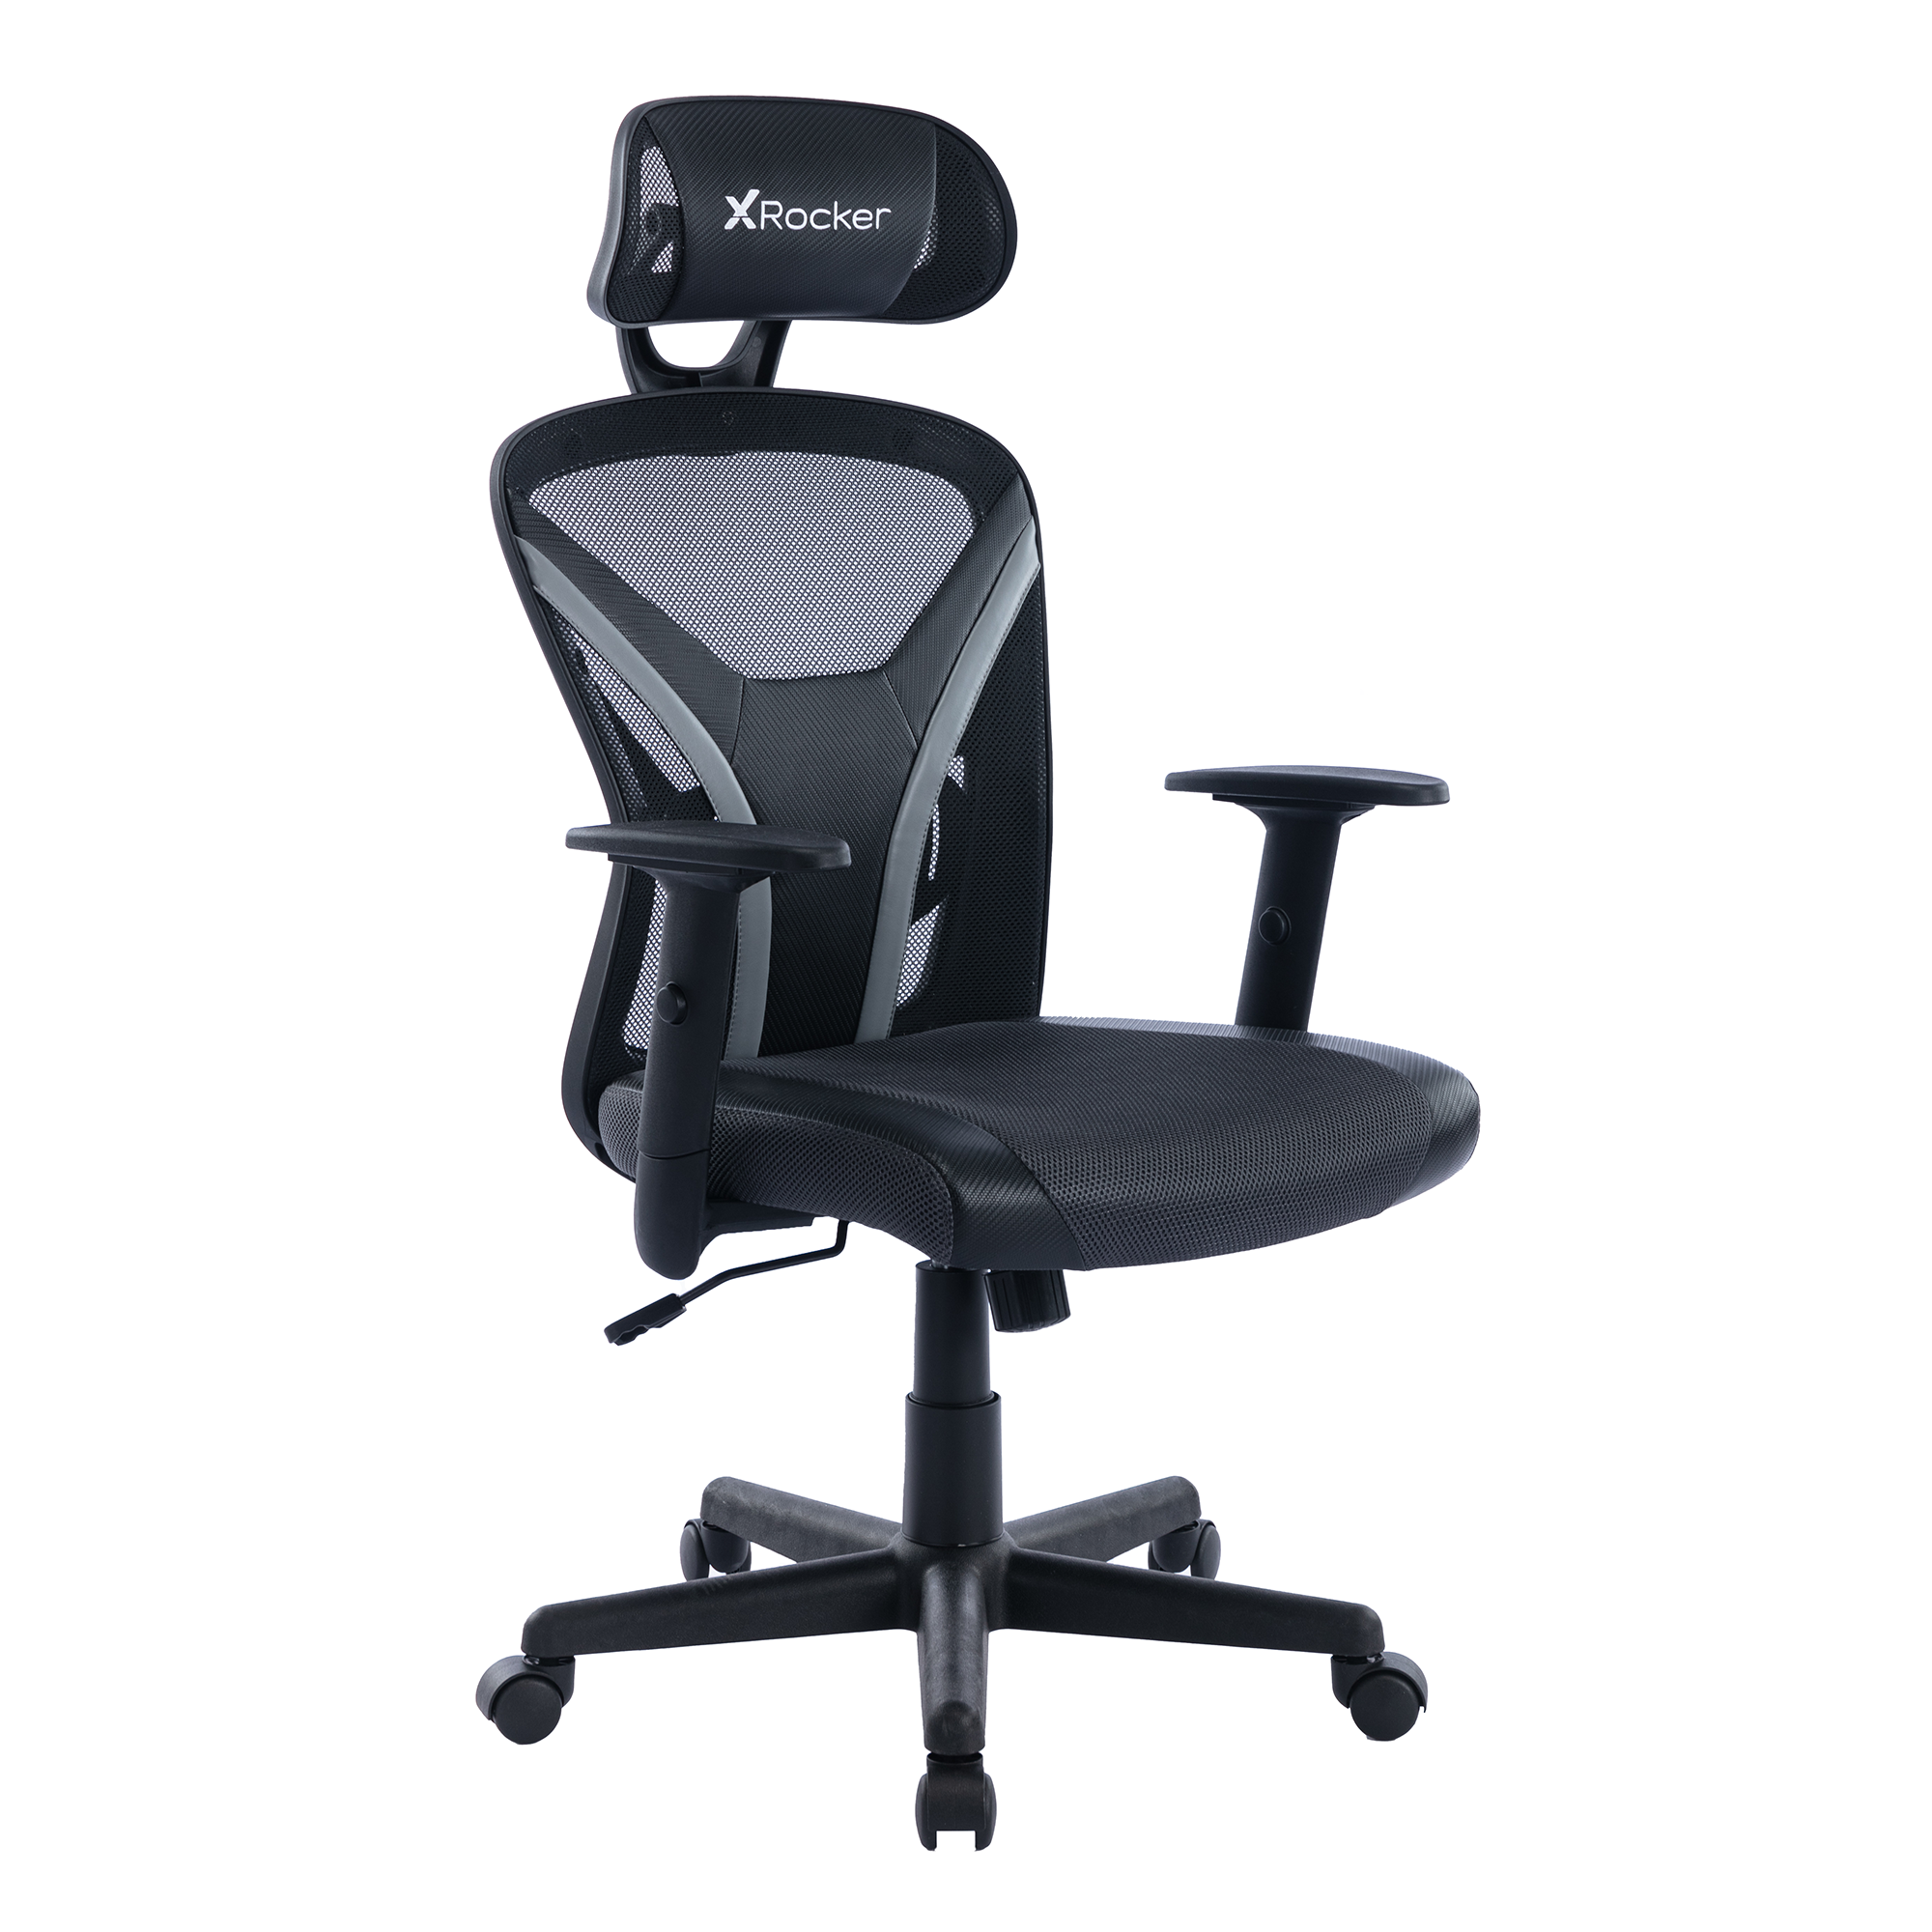 X Rocker Voyage Mesh Gaming Chair, Black, 24.8 x 25 x 41.92-45.66 - image 1 of 11